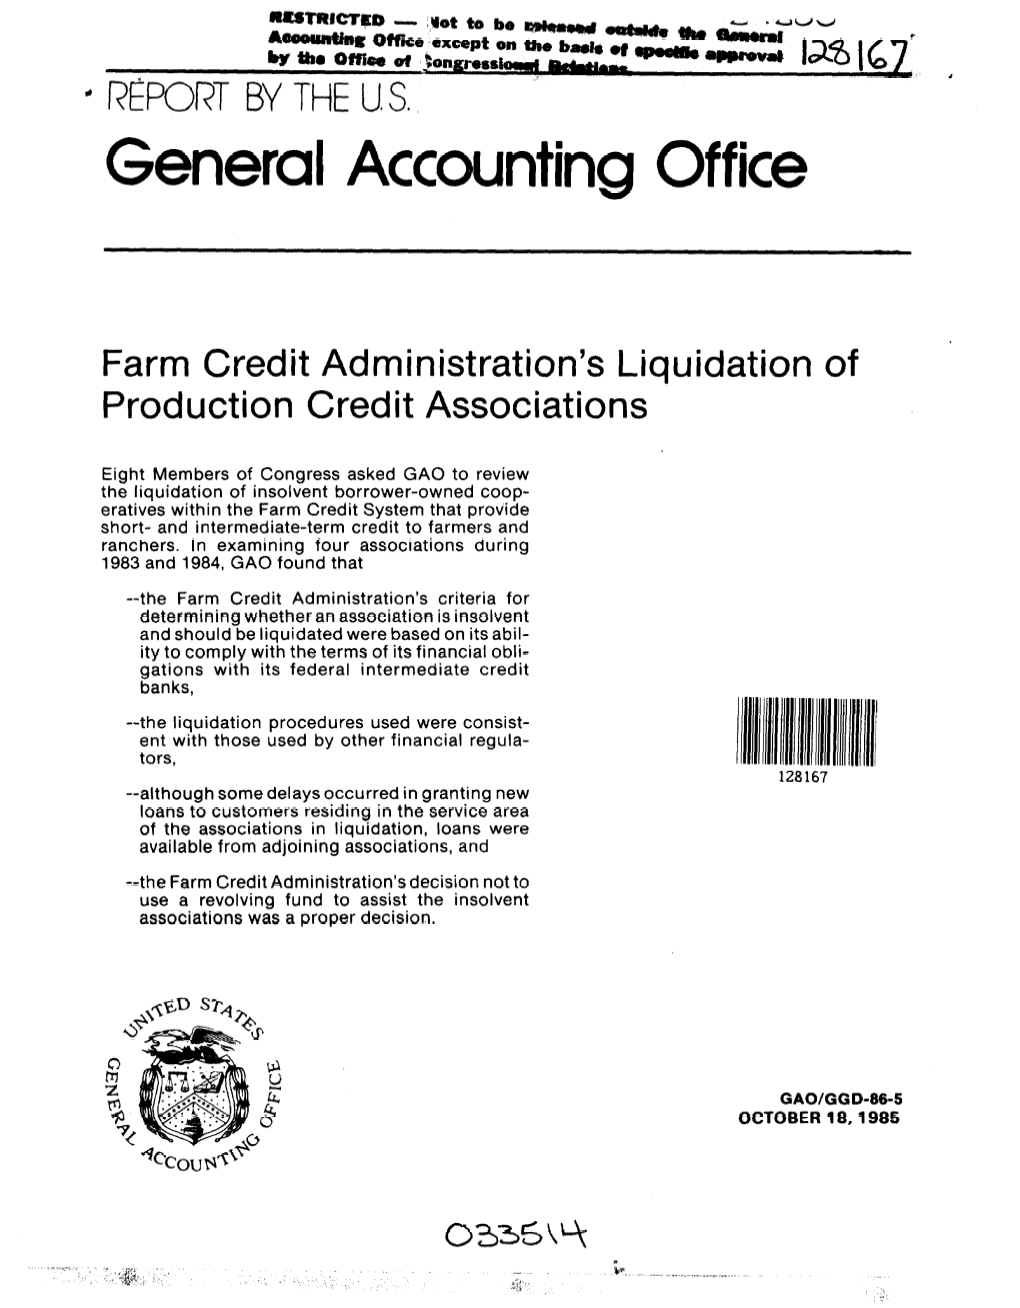 Farm Credit Administration's Liquidation of Production